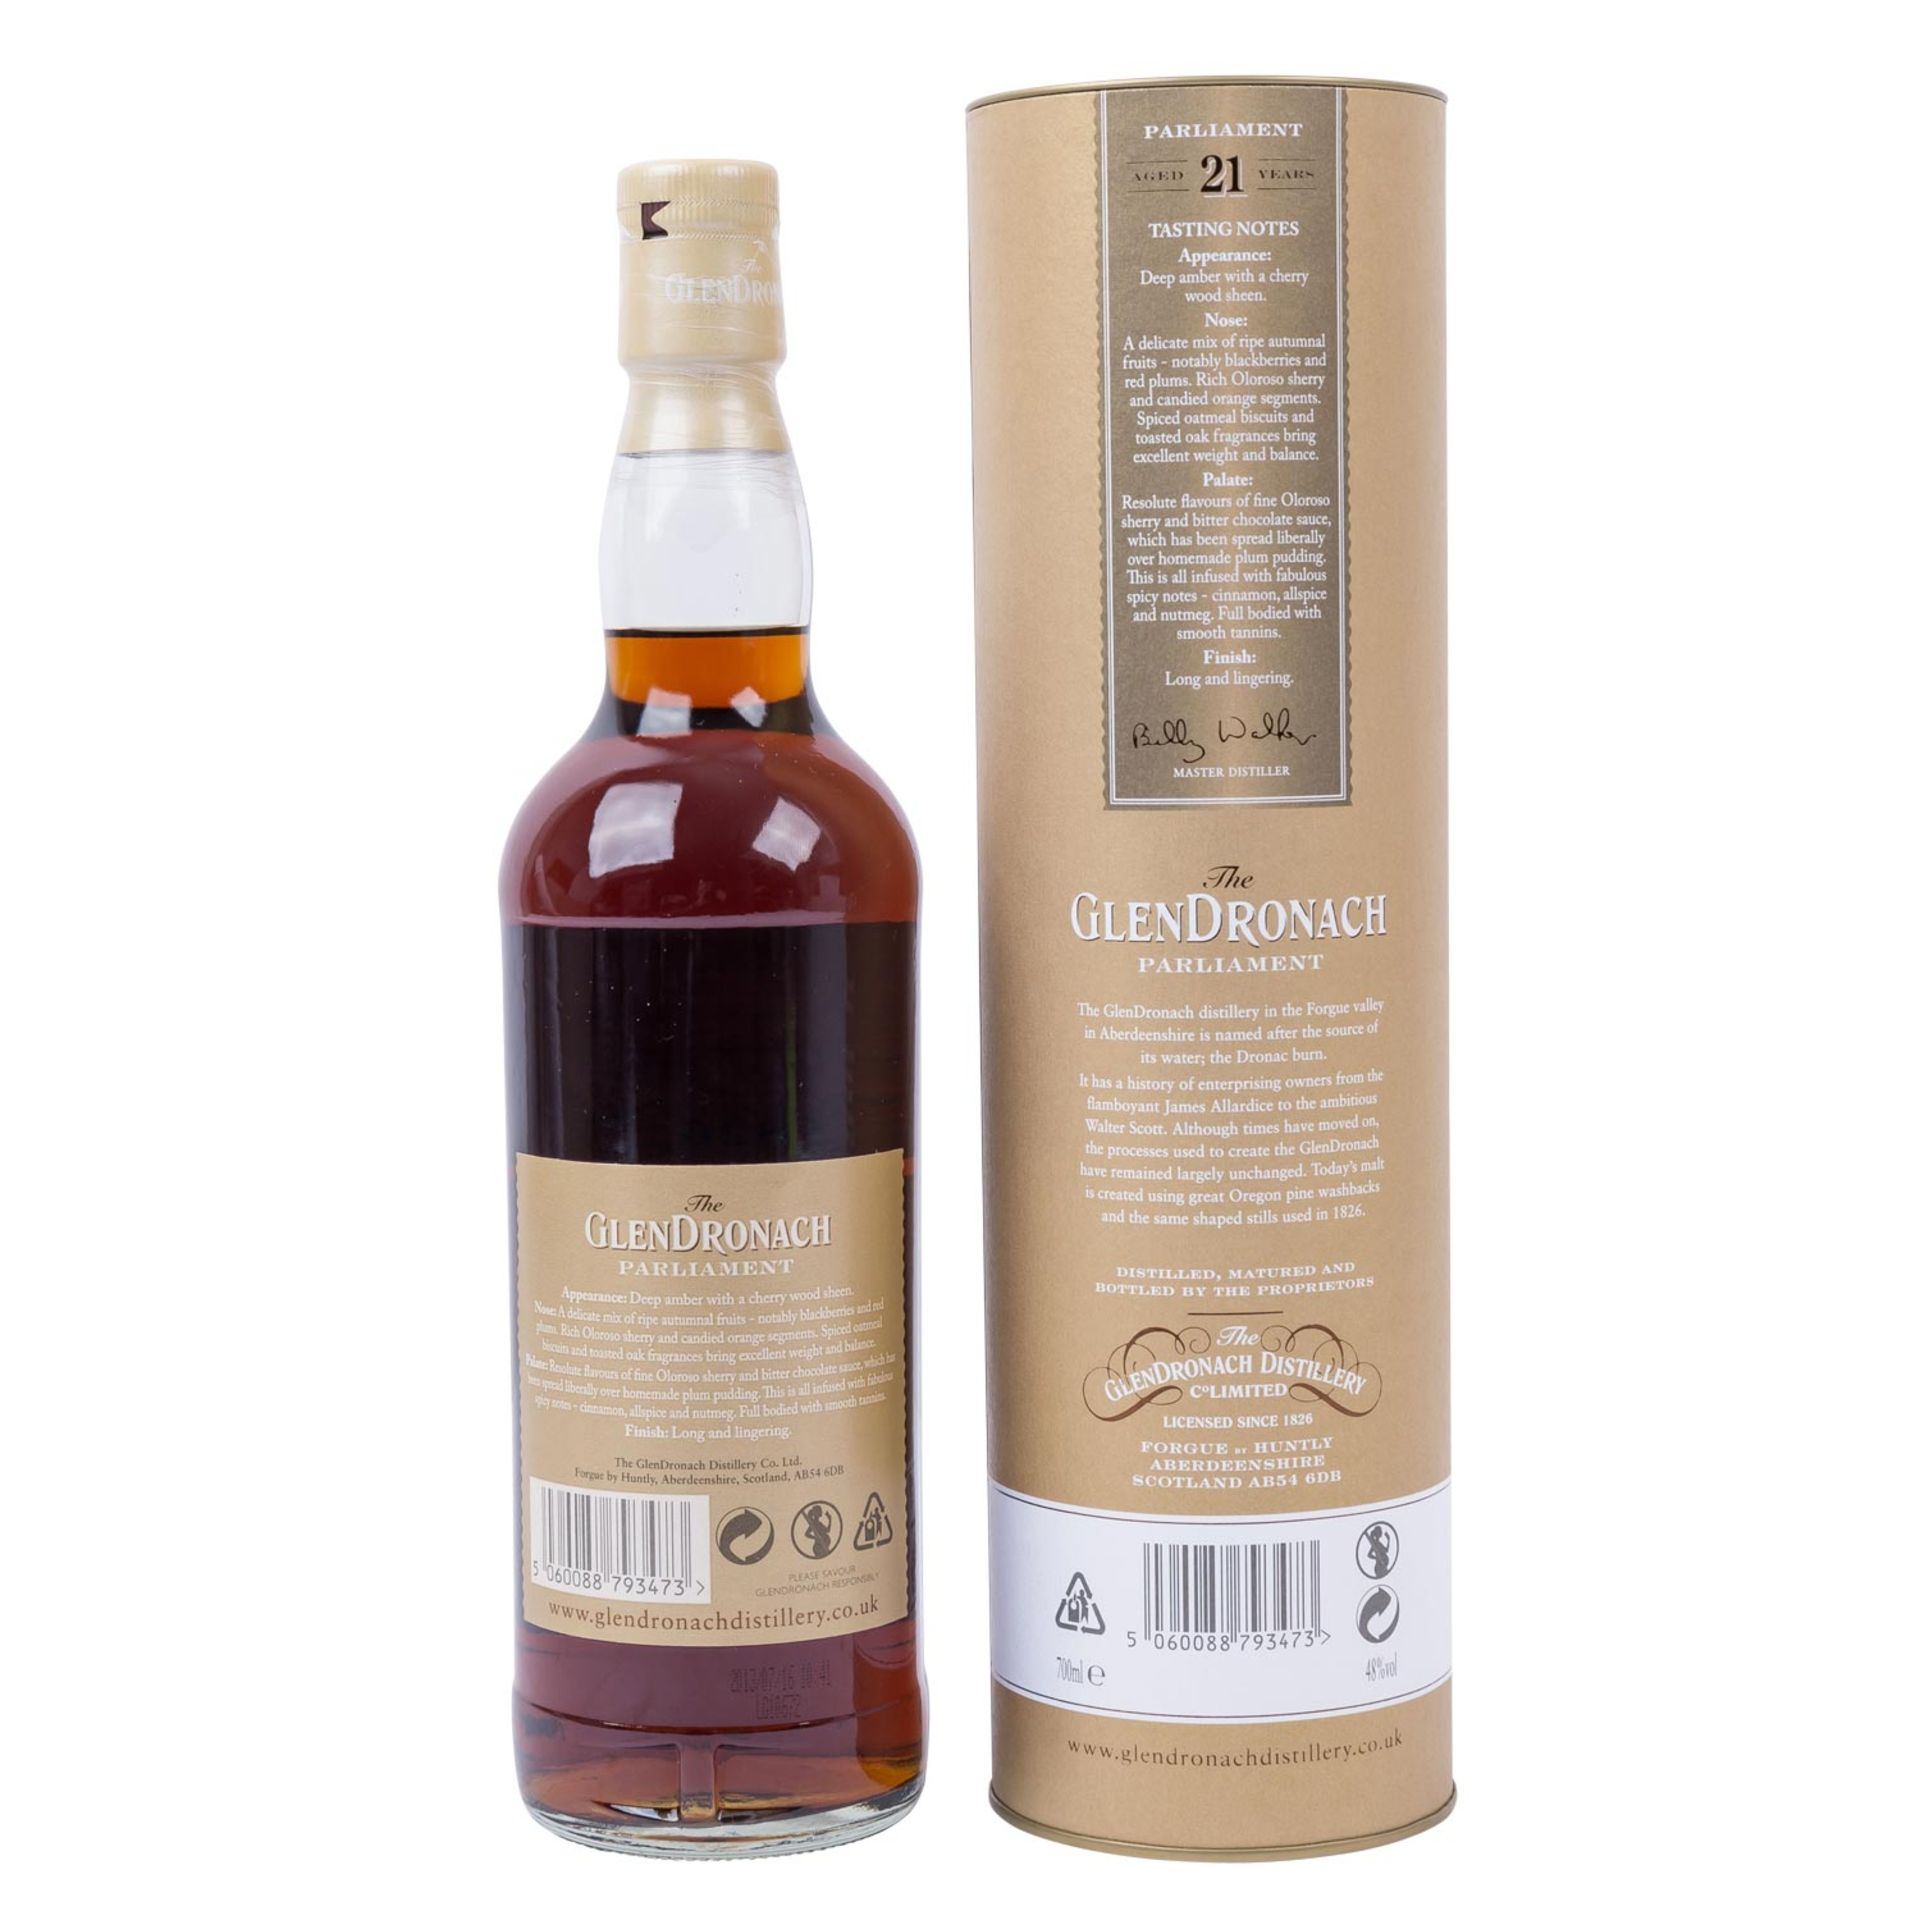 GLENDRONACH PARLIAMENT Highland Single Malt Scotch Whisky 'Aged 21 Years' - Image 2 of 3